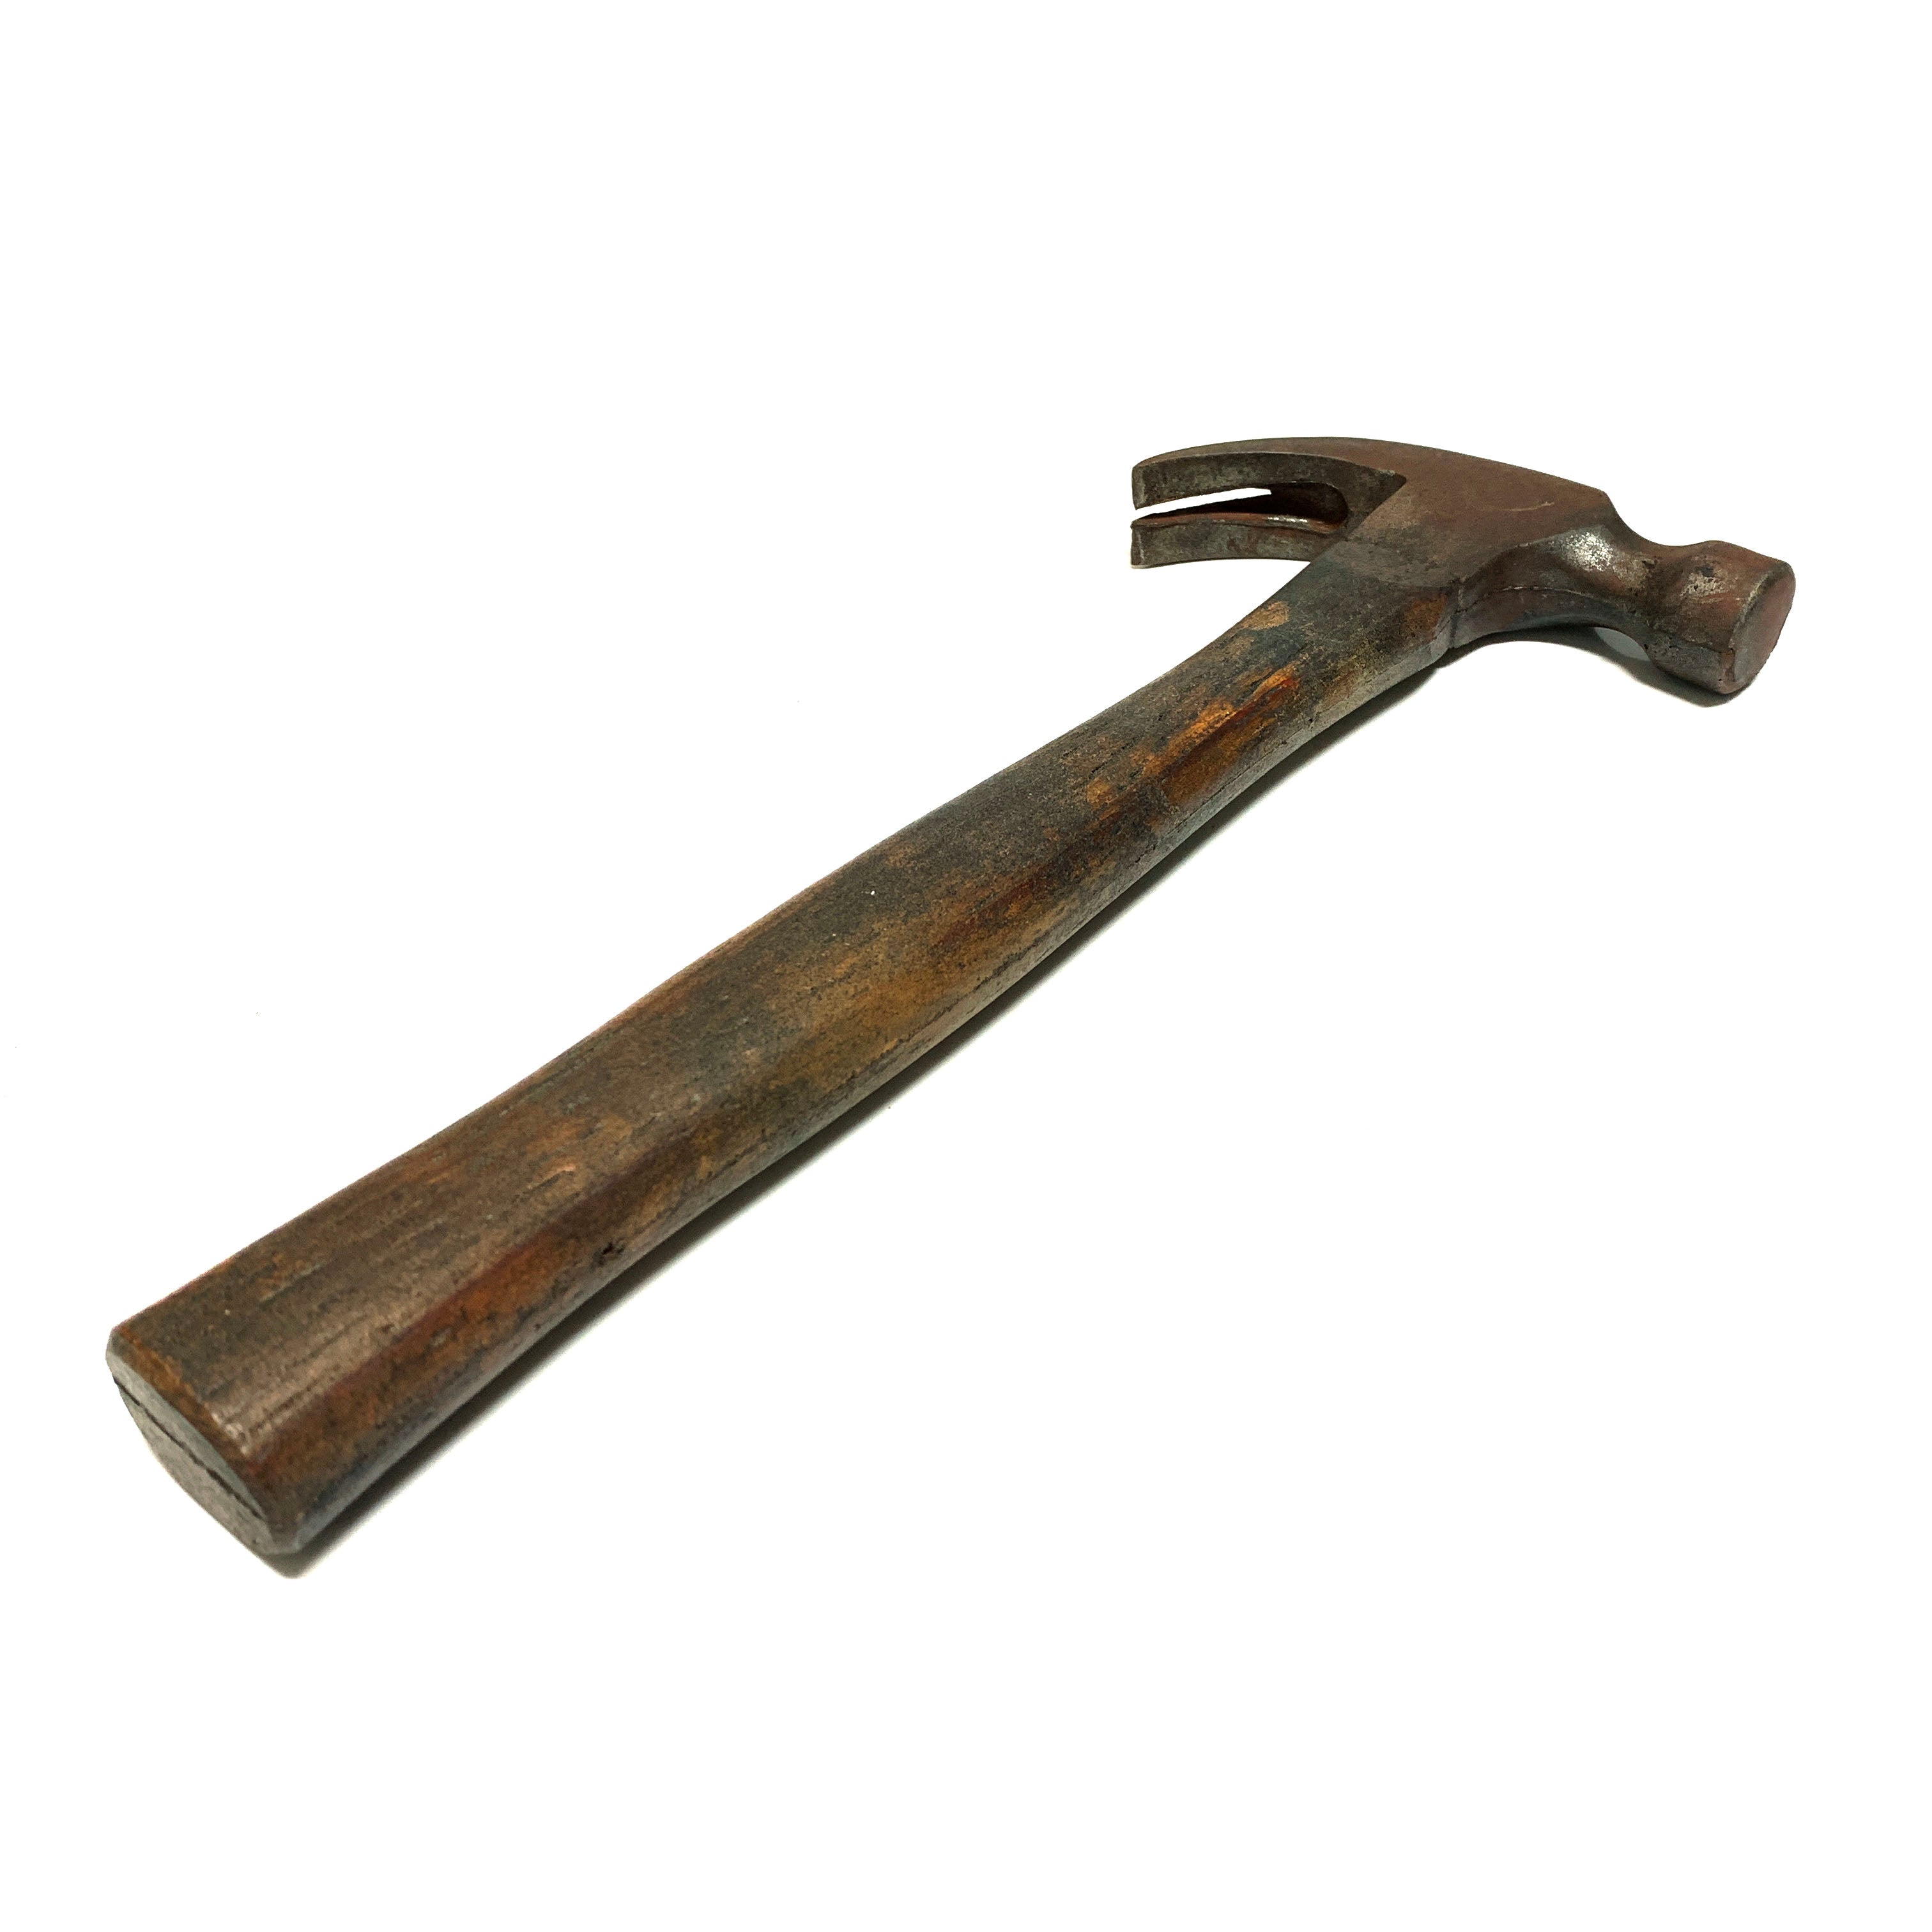 Foam Rubber Standard Claw Hammer Stunt Prop - RUSTY - Rusty Head with Aged Handle